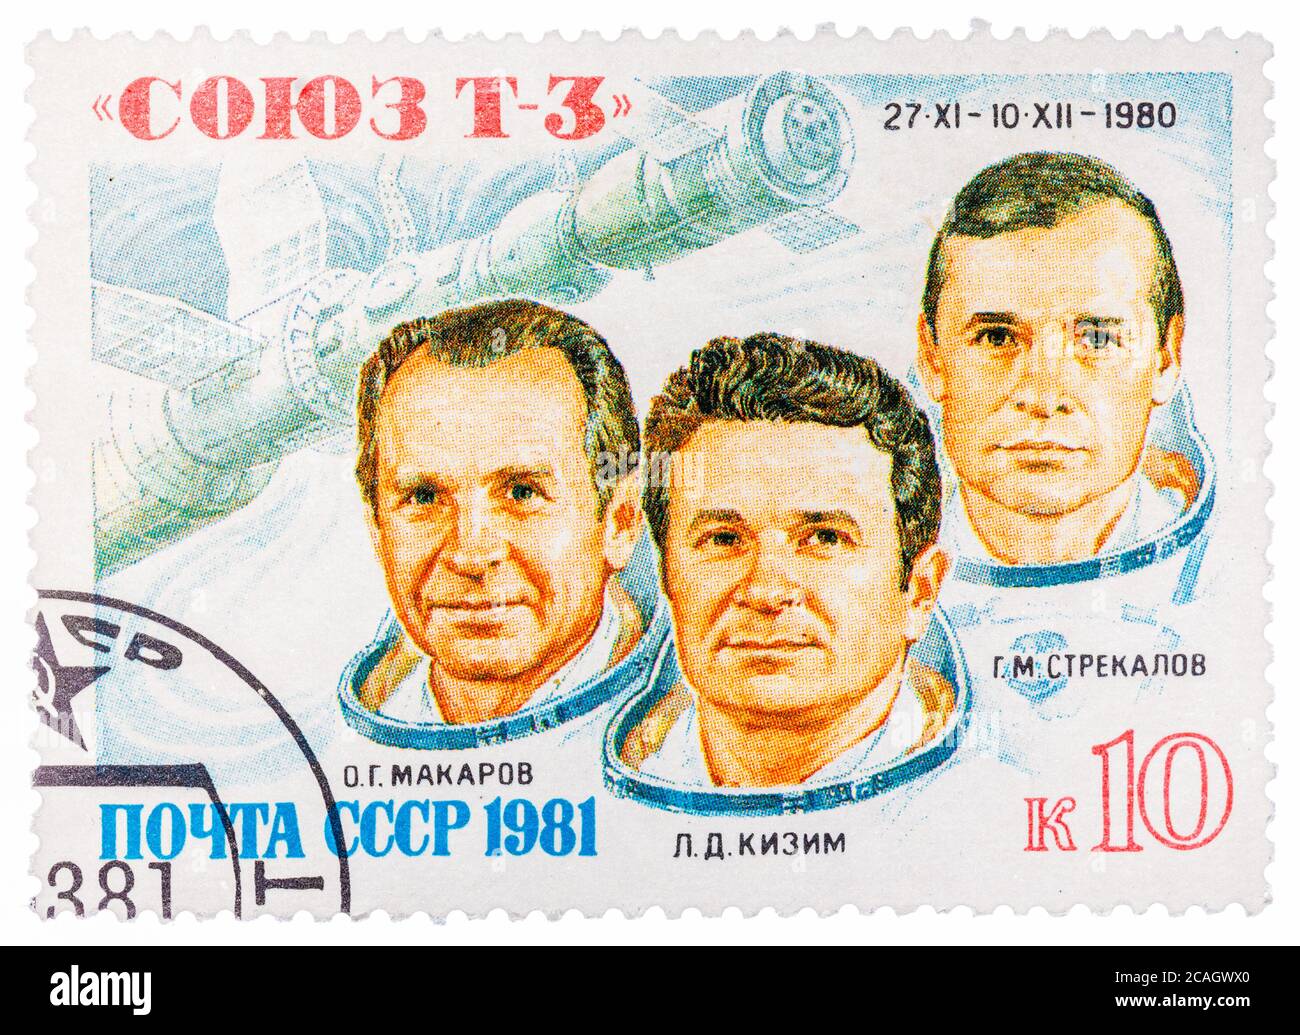 Il francobollo stampato in URSS mostra i cosmonauti sovietici Makarov, Kizim, Strekalov e un'astronave da trasporto 'Soyuz-T3' Foto Stock